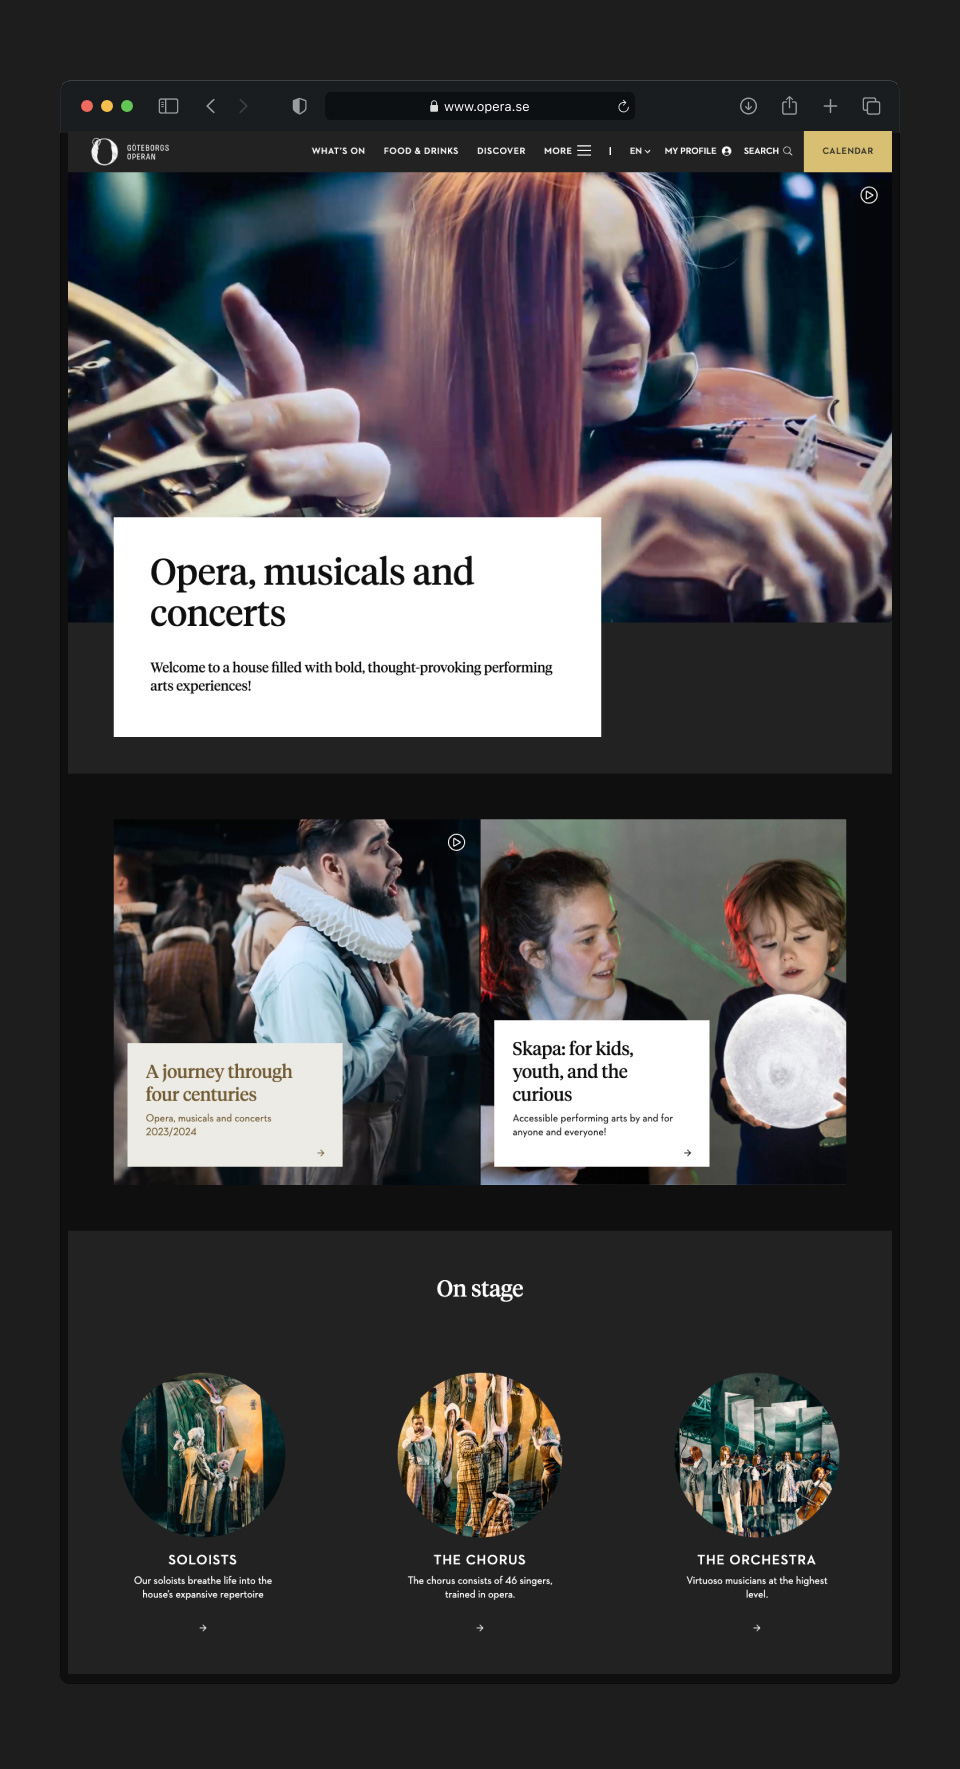 opera-new-images-big03